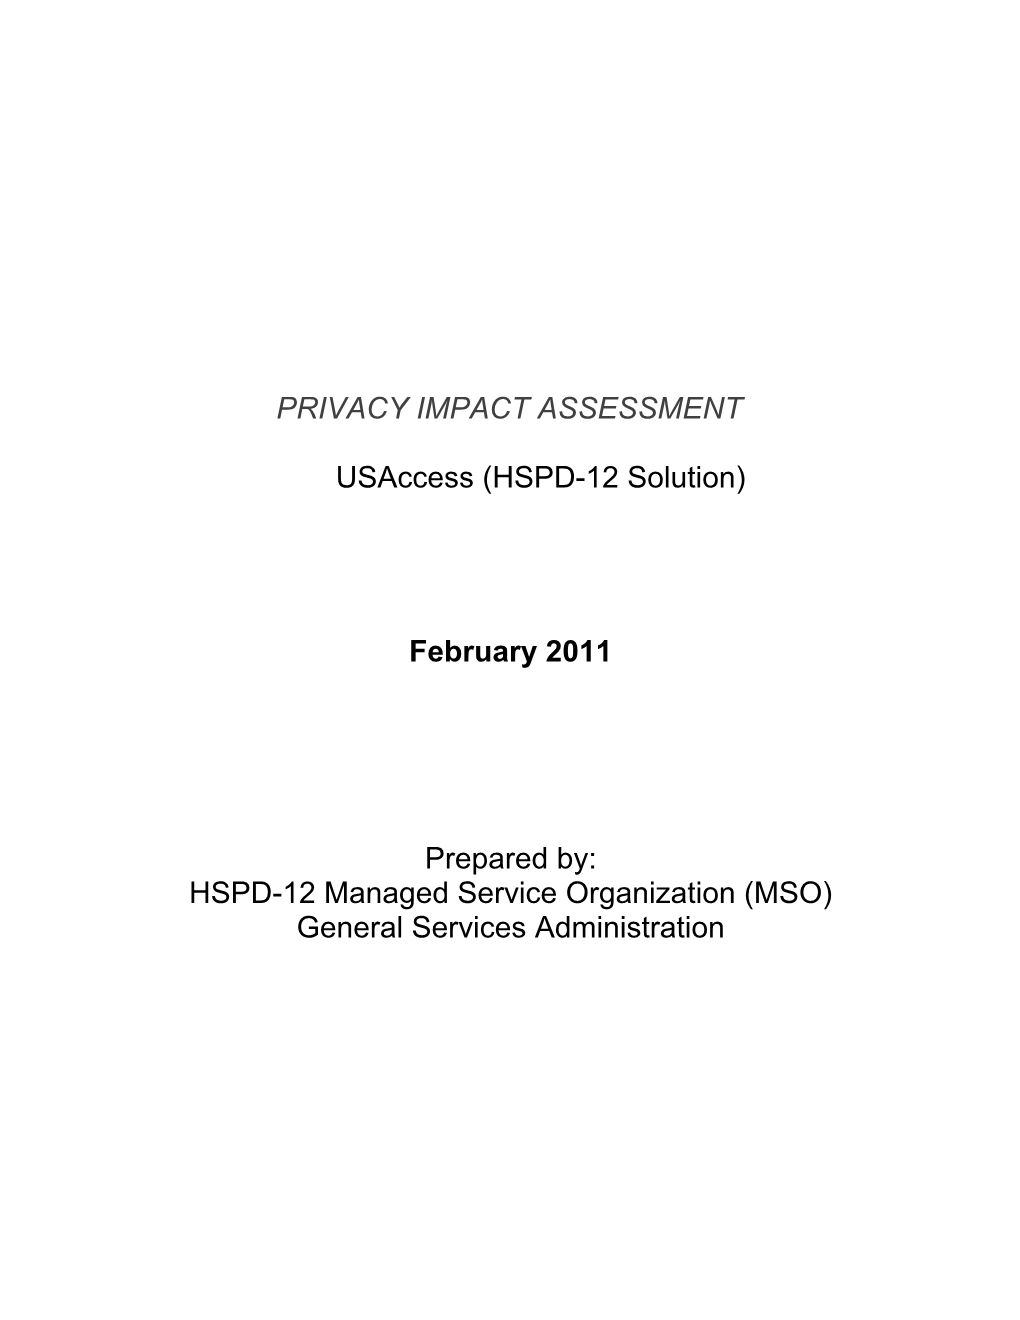 HSPD-12 Managed Service Organization (MSO)